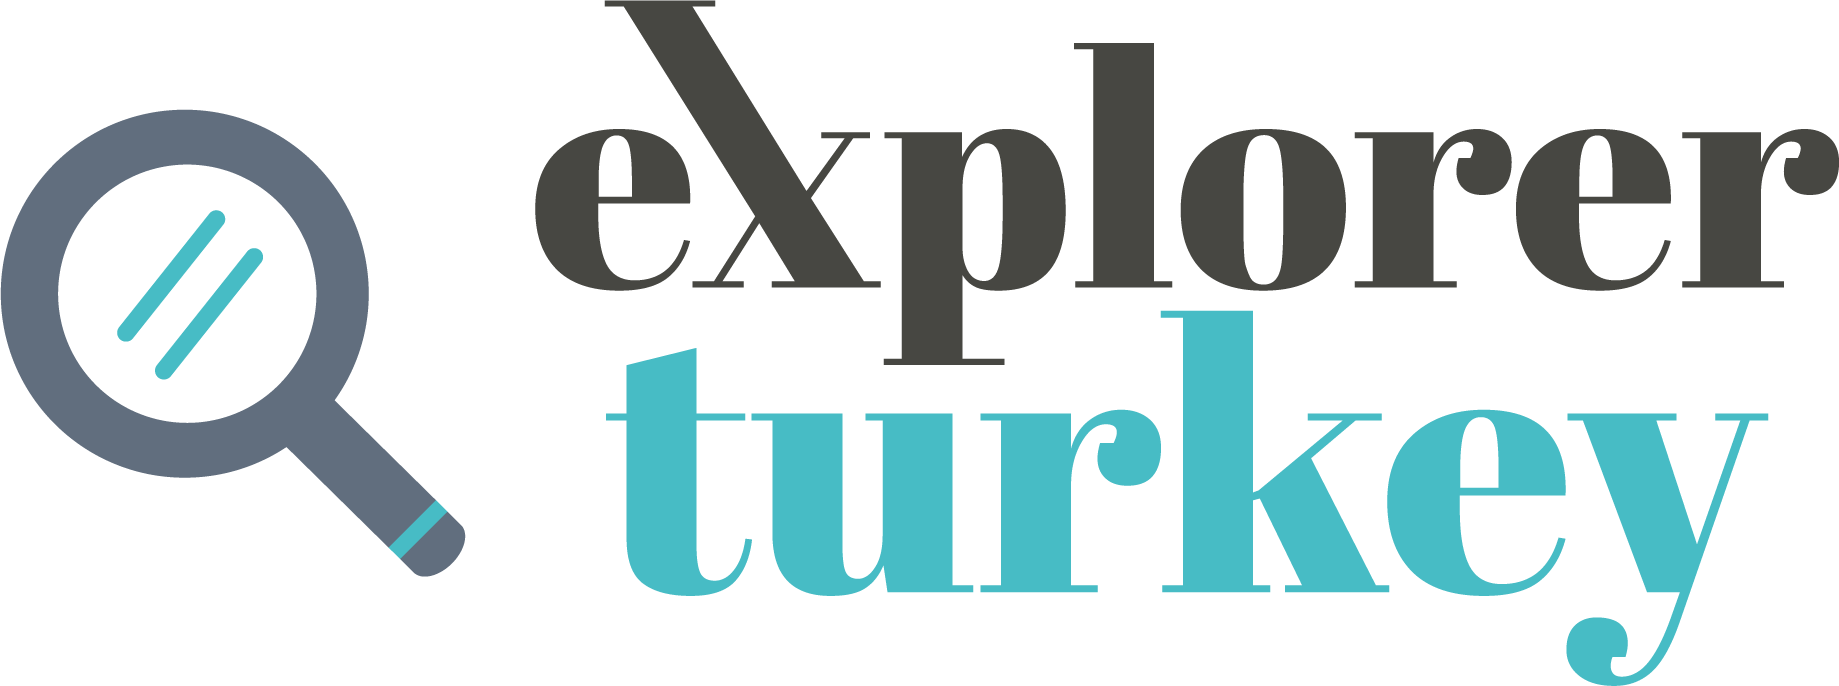 explorerturkey logo